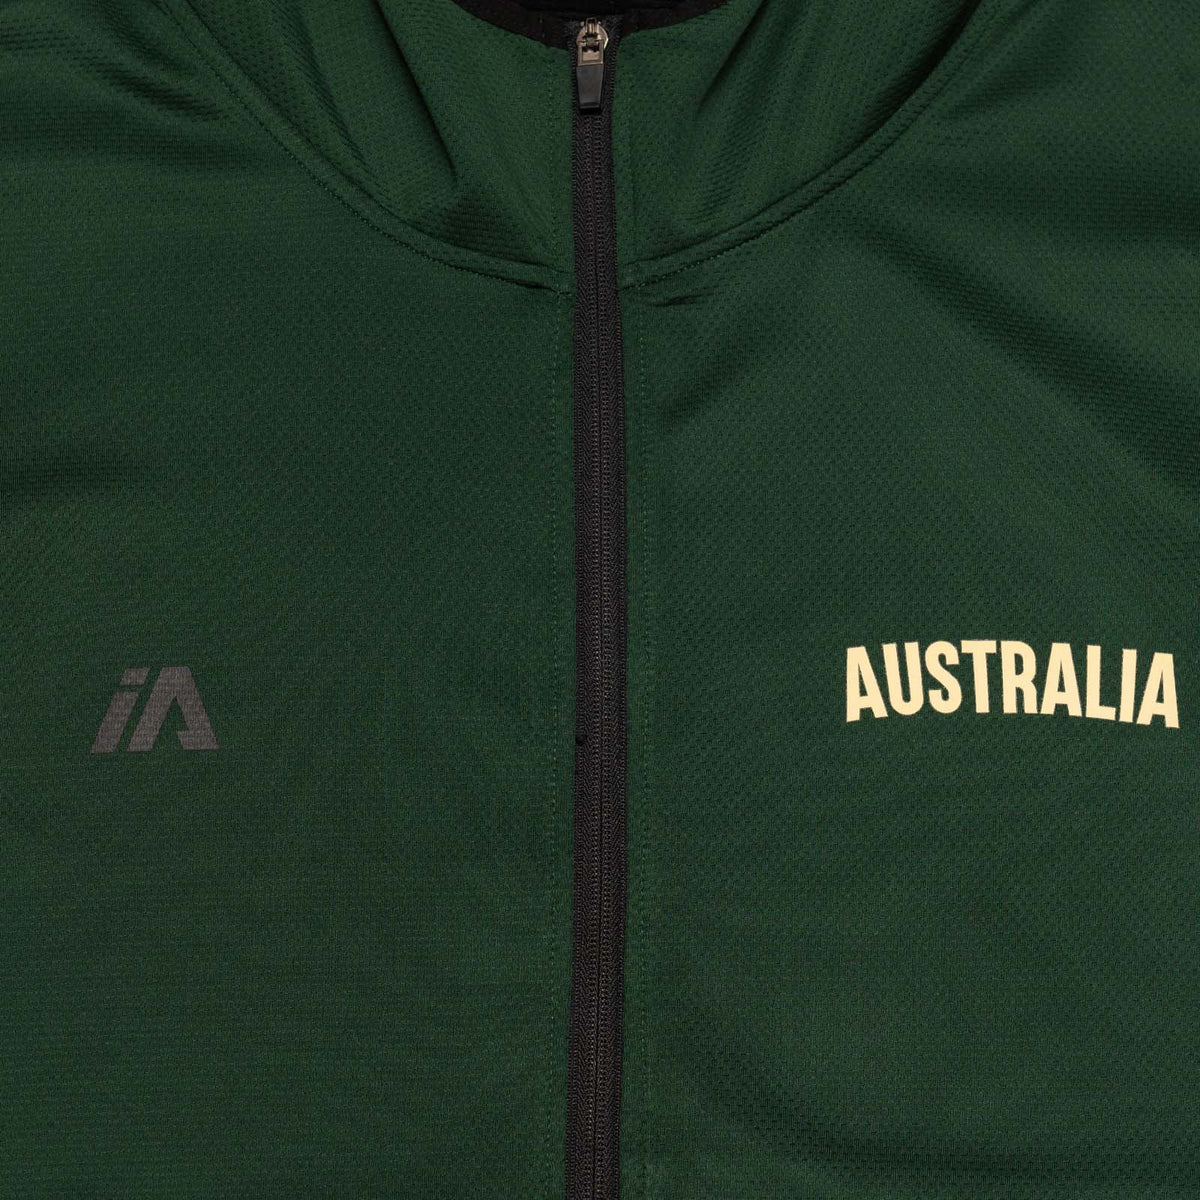 Australian Boomers 2023 FIBA Basketball World Cup Authentic Warm Up Jacket - Green